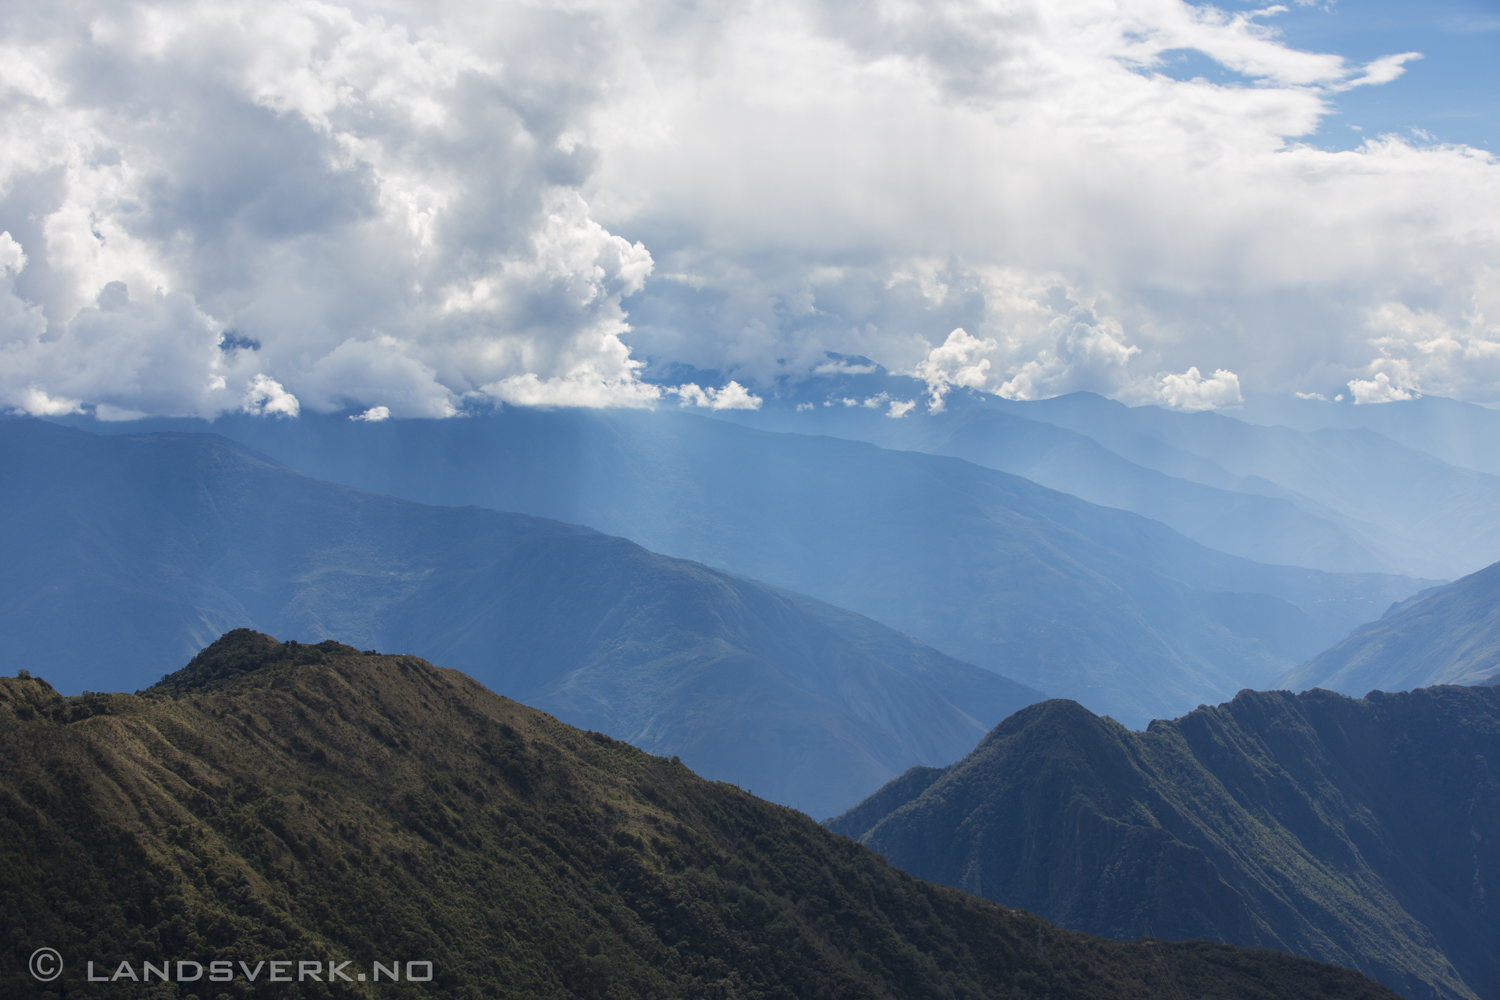 Walking the Inka Trail to Machu Picchu, Peru. 

(Canons EOS 5D Mark III / Canon EF 70-200mm 
f/2.8 L IS II USM)